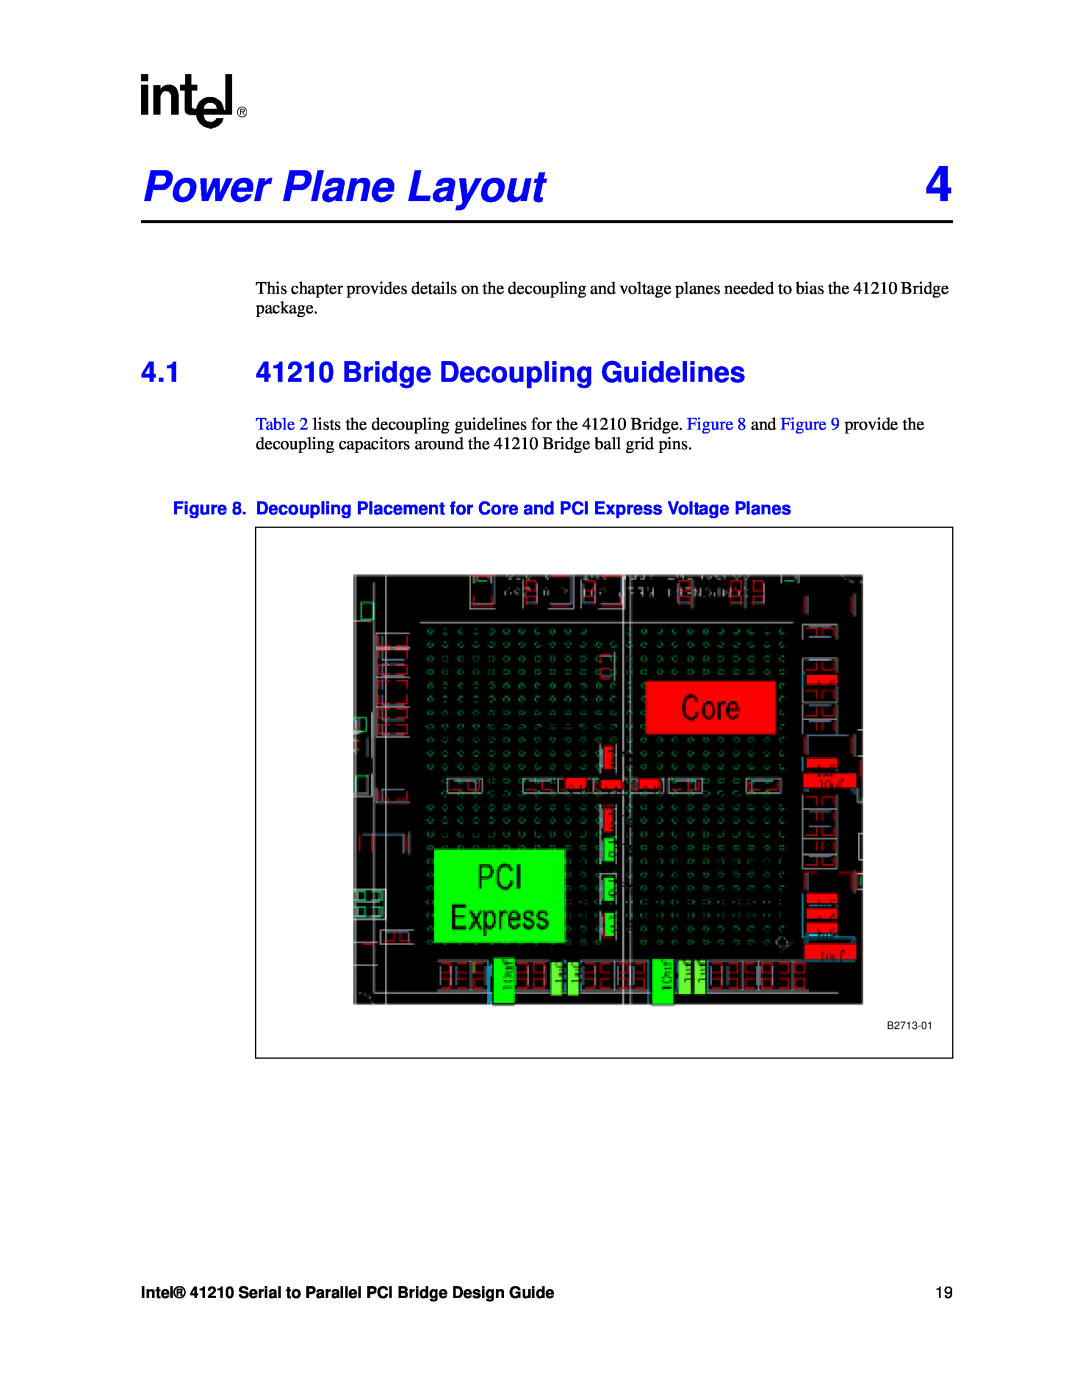 Intel manual Power Plane Layout, 4.1 41210 Bridge Decoupling Guidelines 